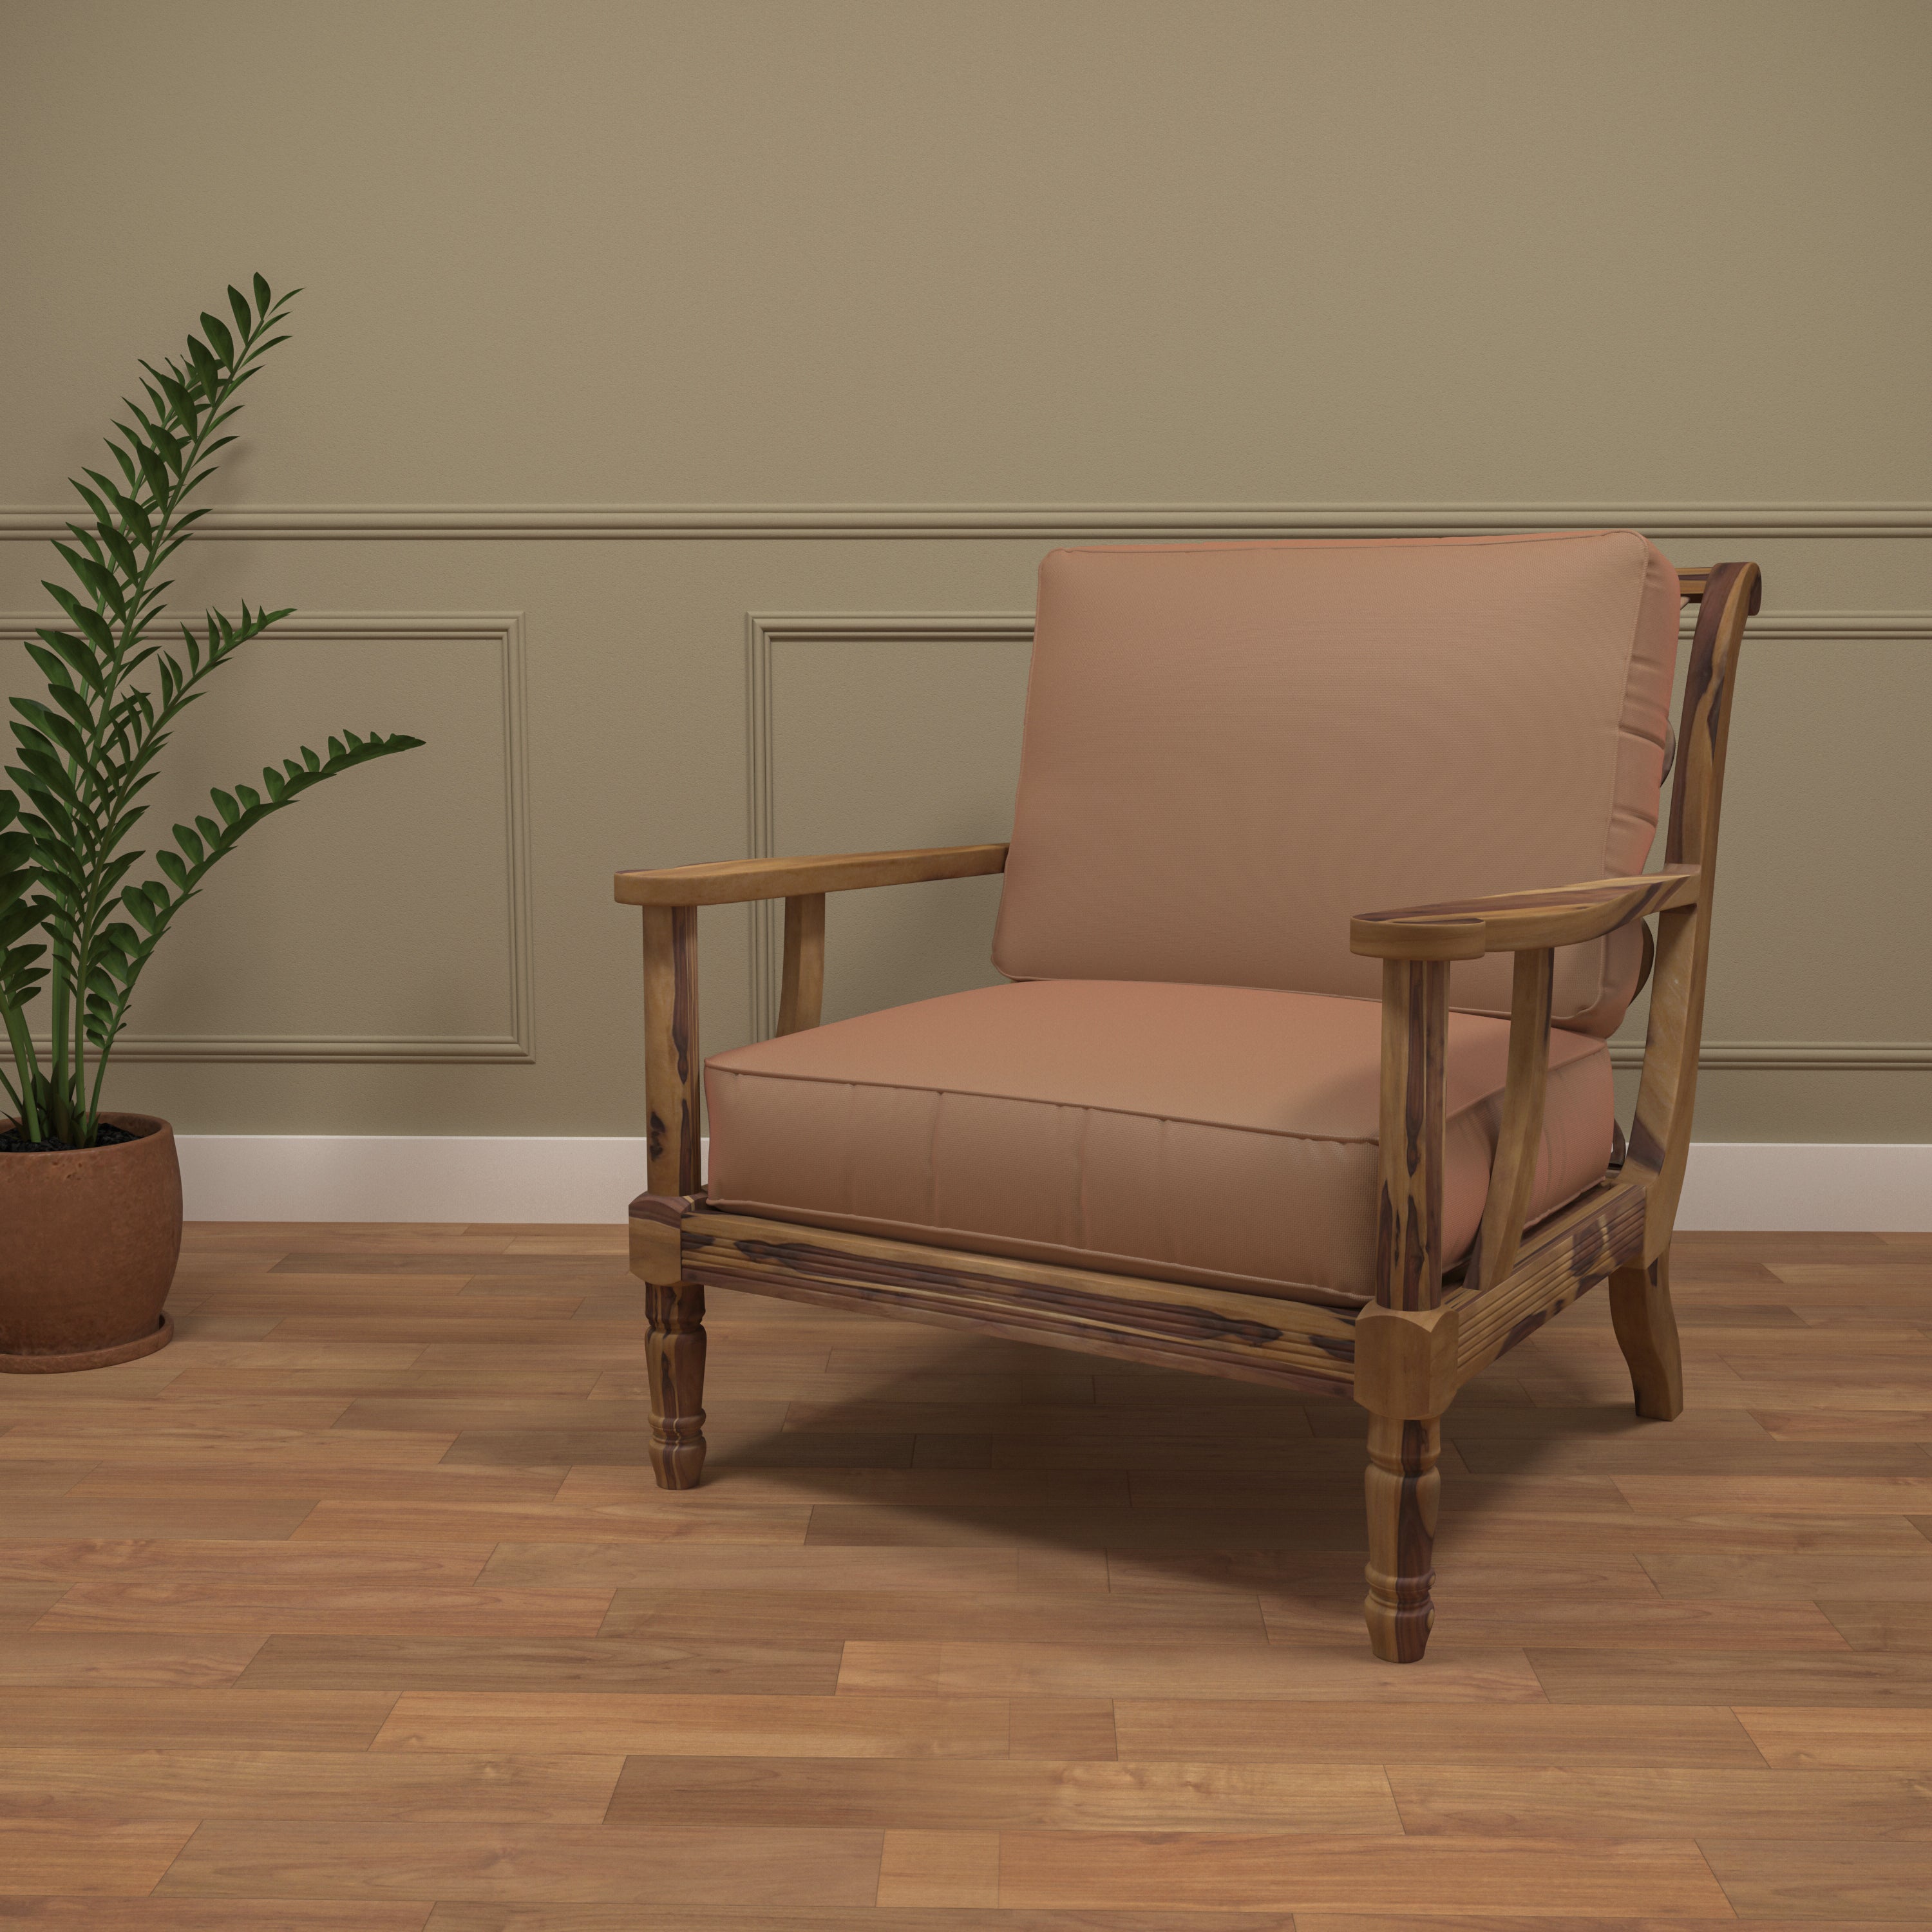 Sheesham wood Contemporary Singe Seater Sofa style arm chair Arm Chair